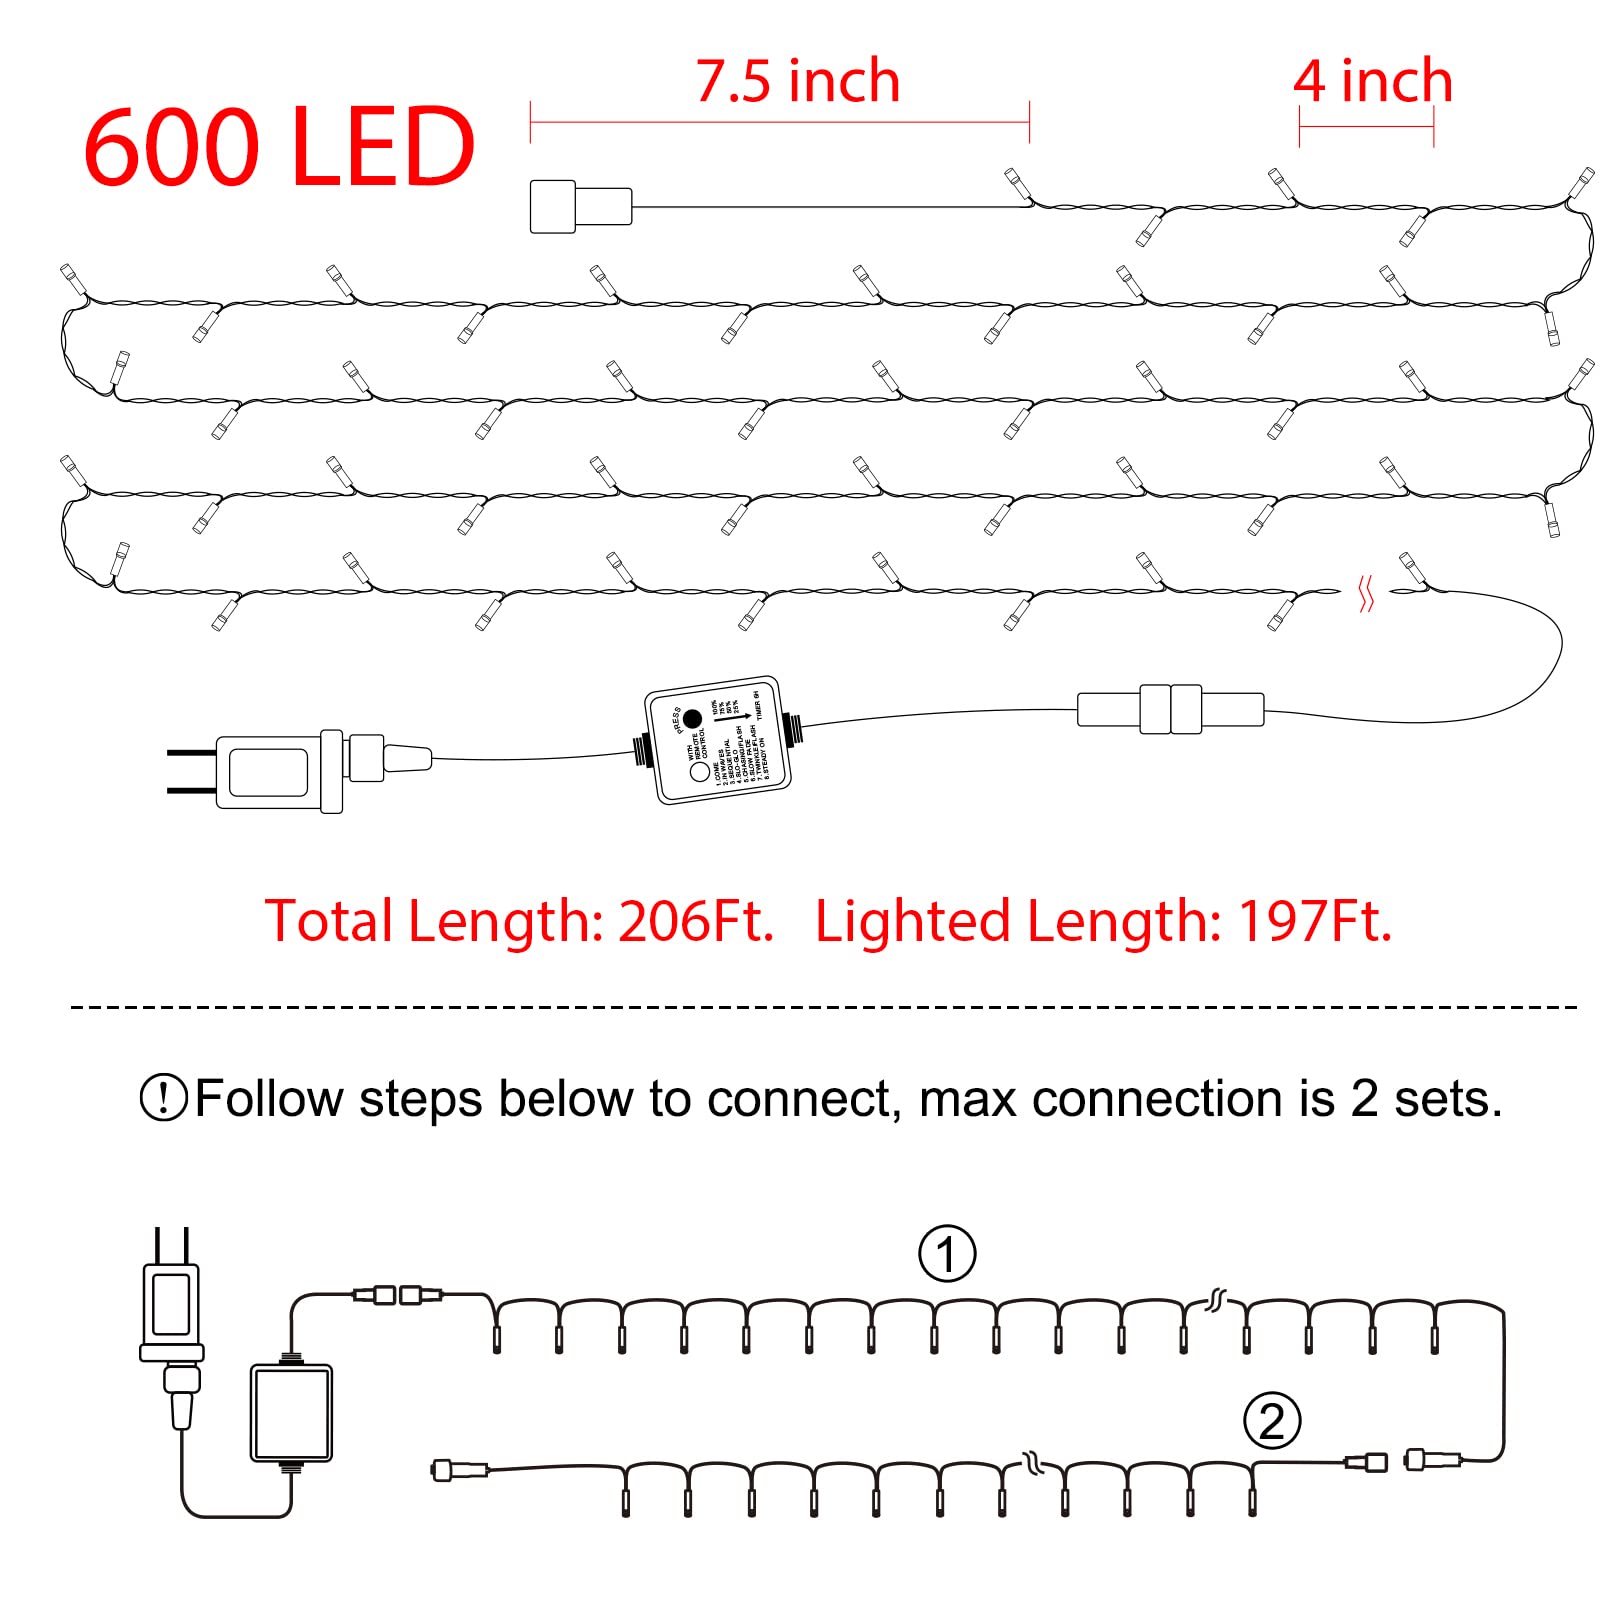 168 Feet / 600 LED / Warm White / Green Wire